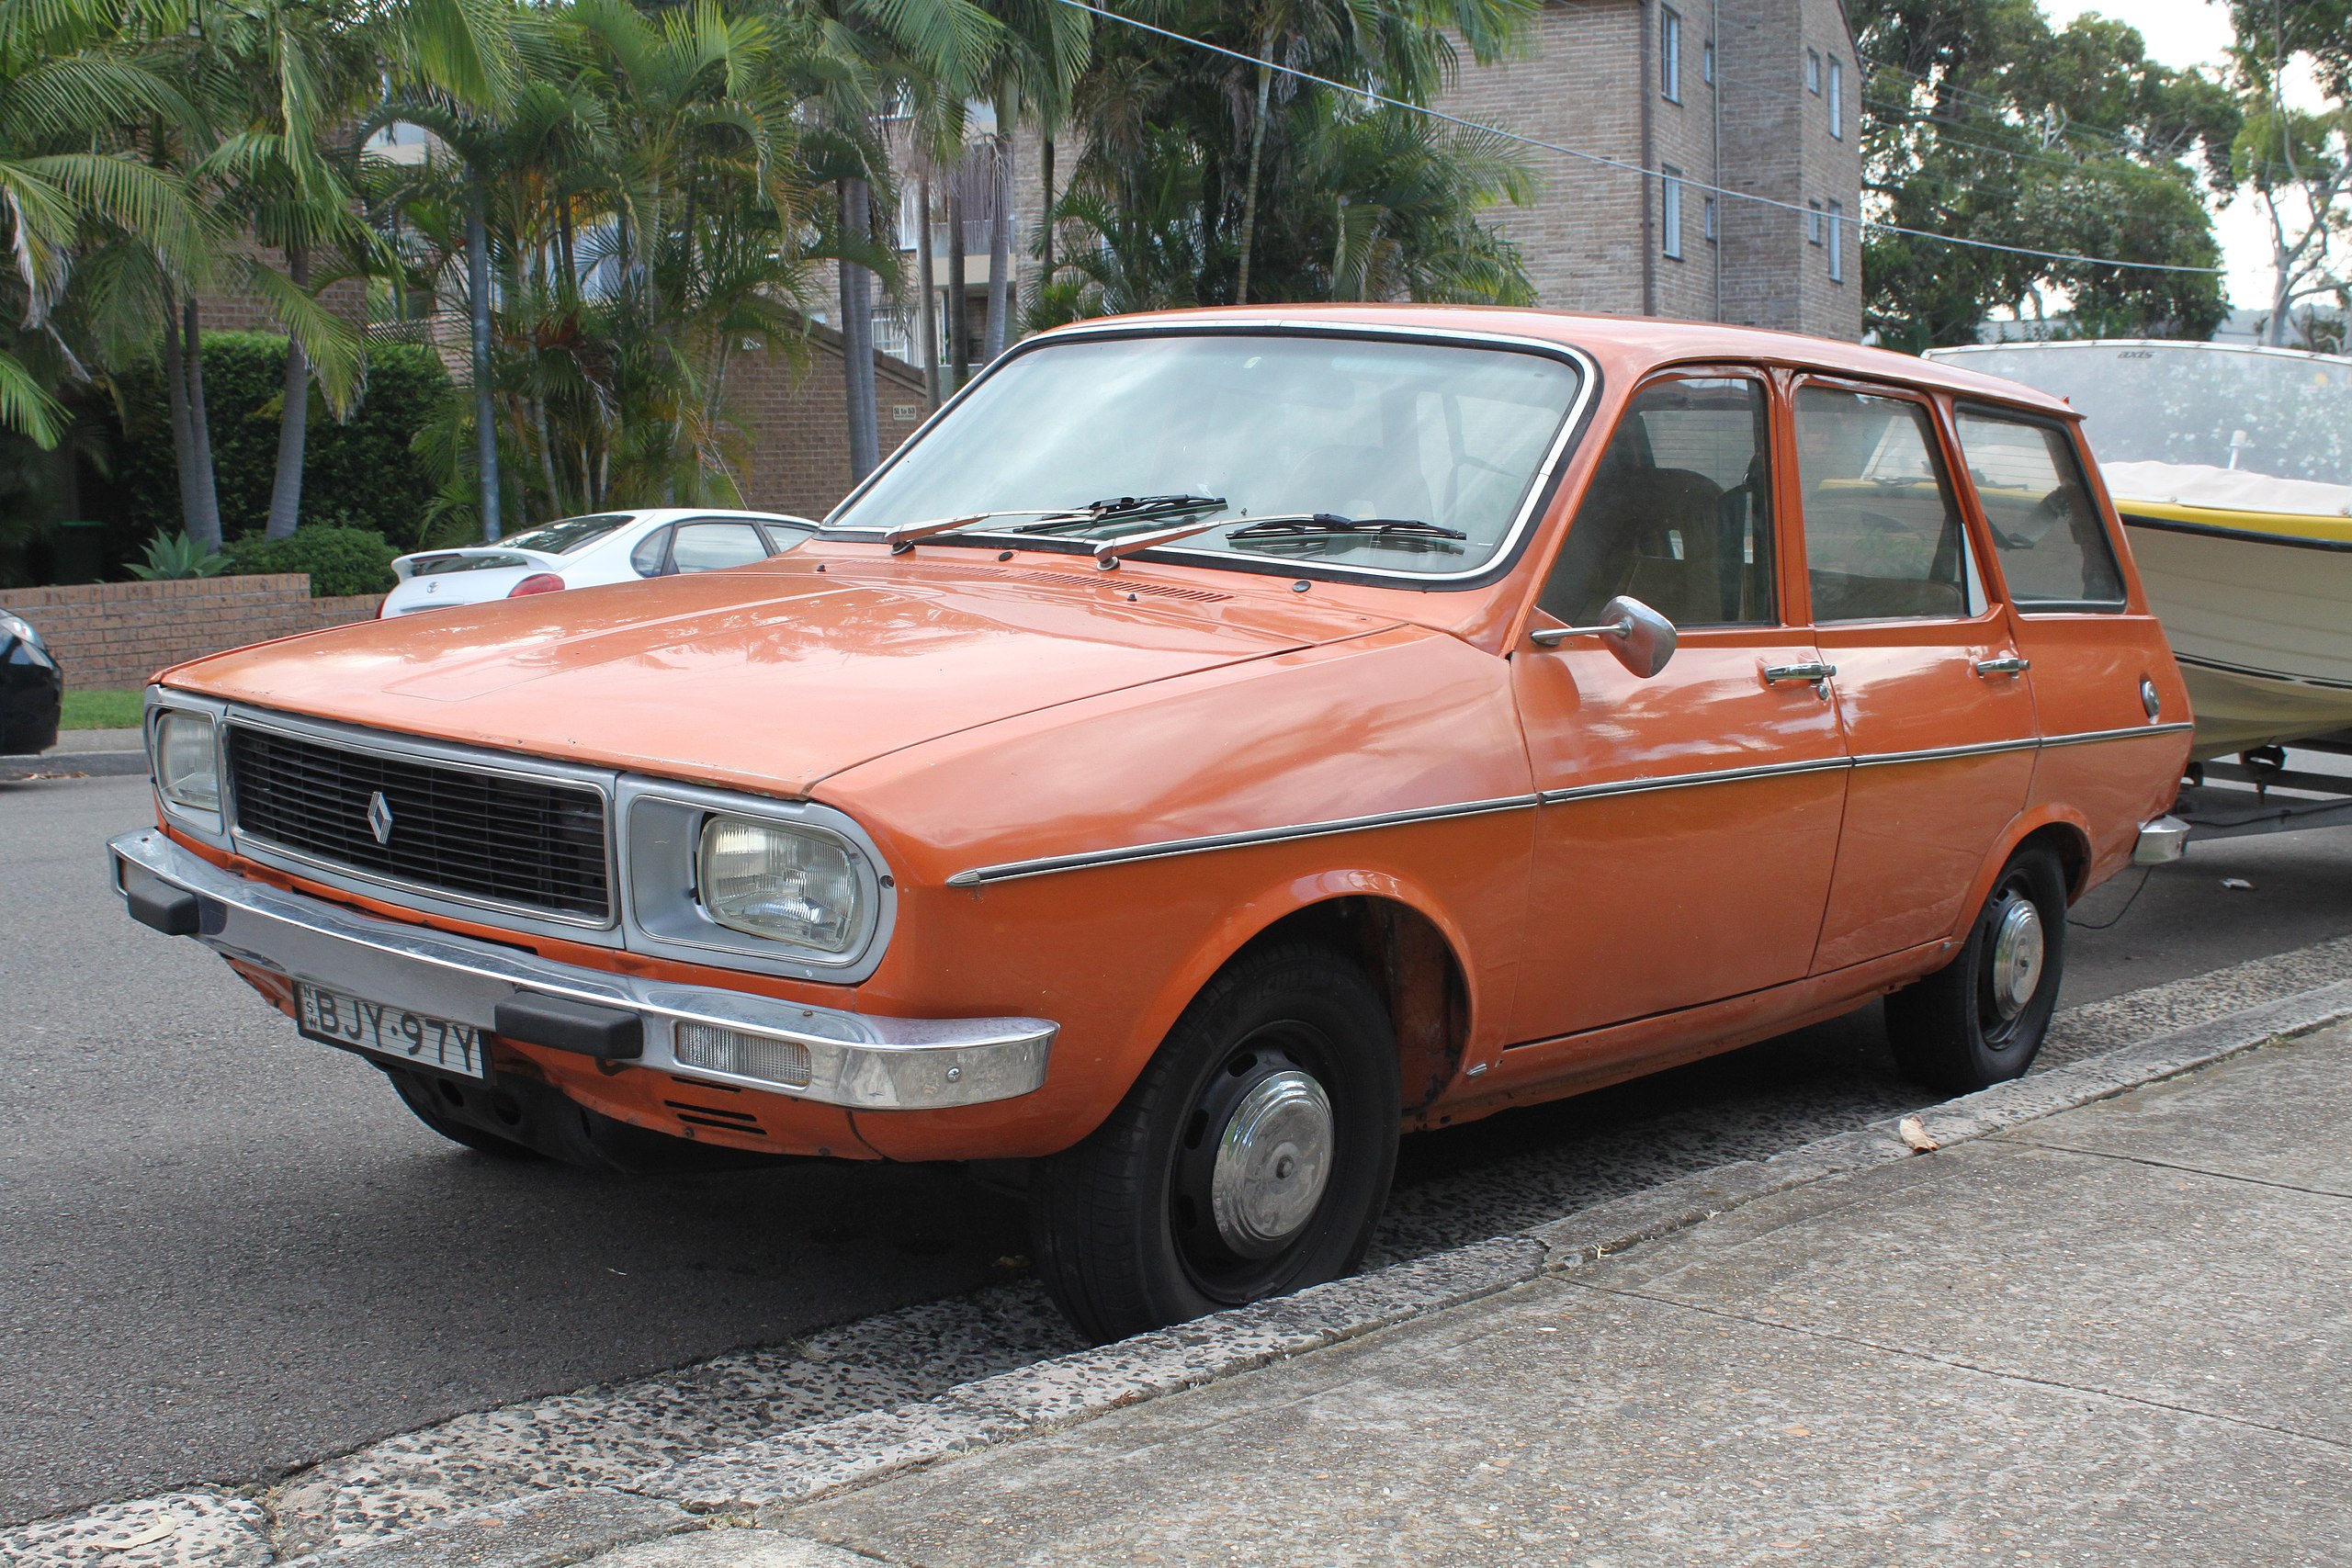 File:1976 Renault 12 1.4 station wagon (25041714523).jpg Wikimedia Commons